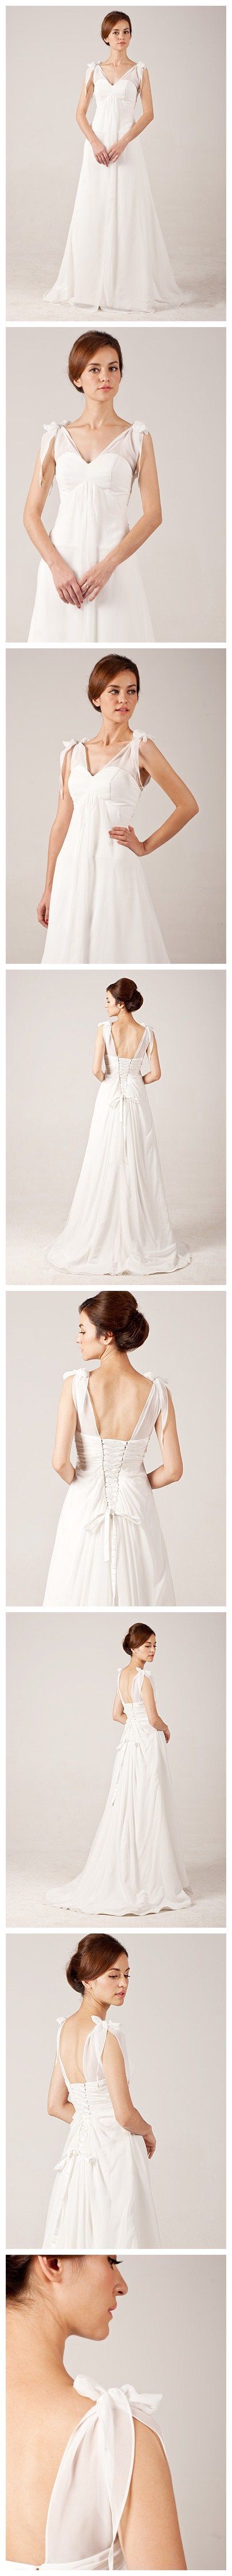 Graceful Simple V-neck Chiffon Wedding Dress with Bows On Shoulder